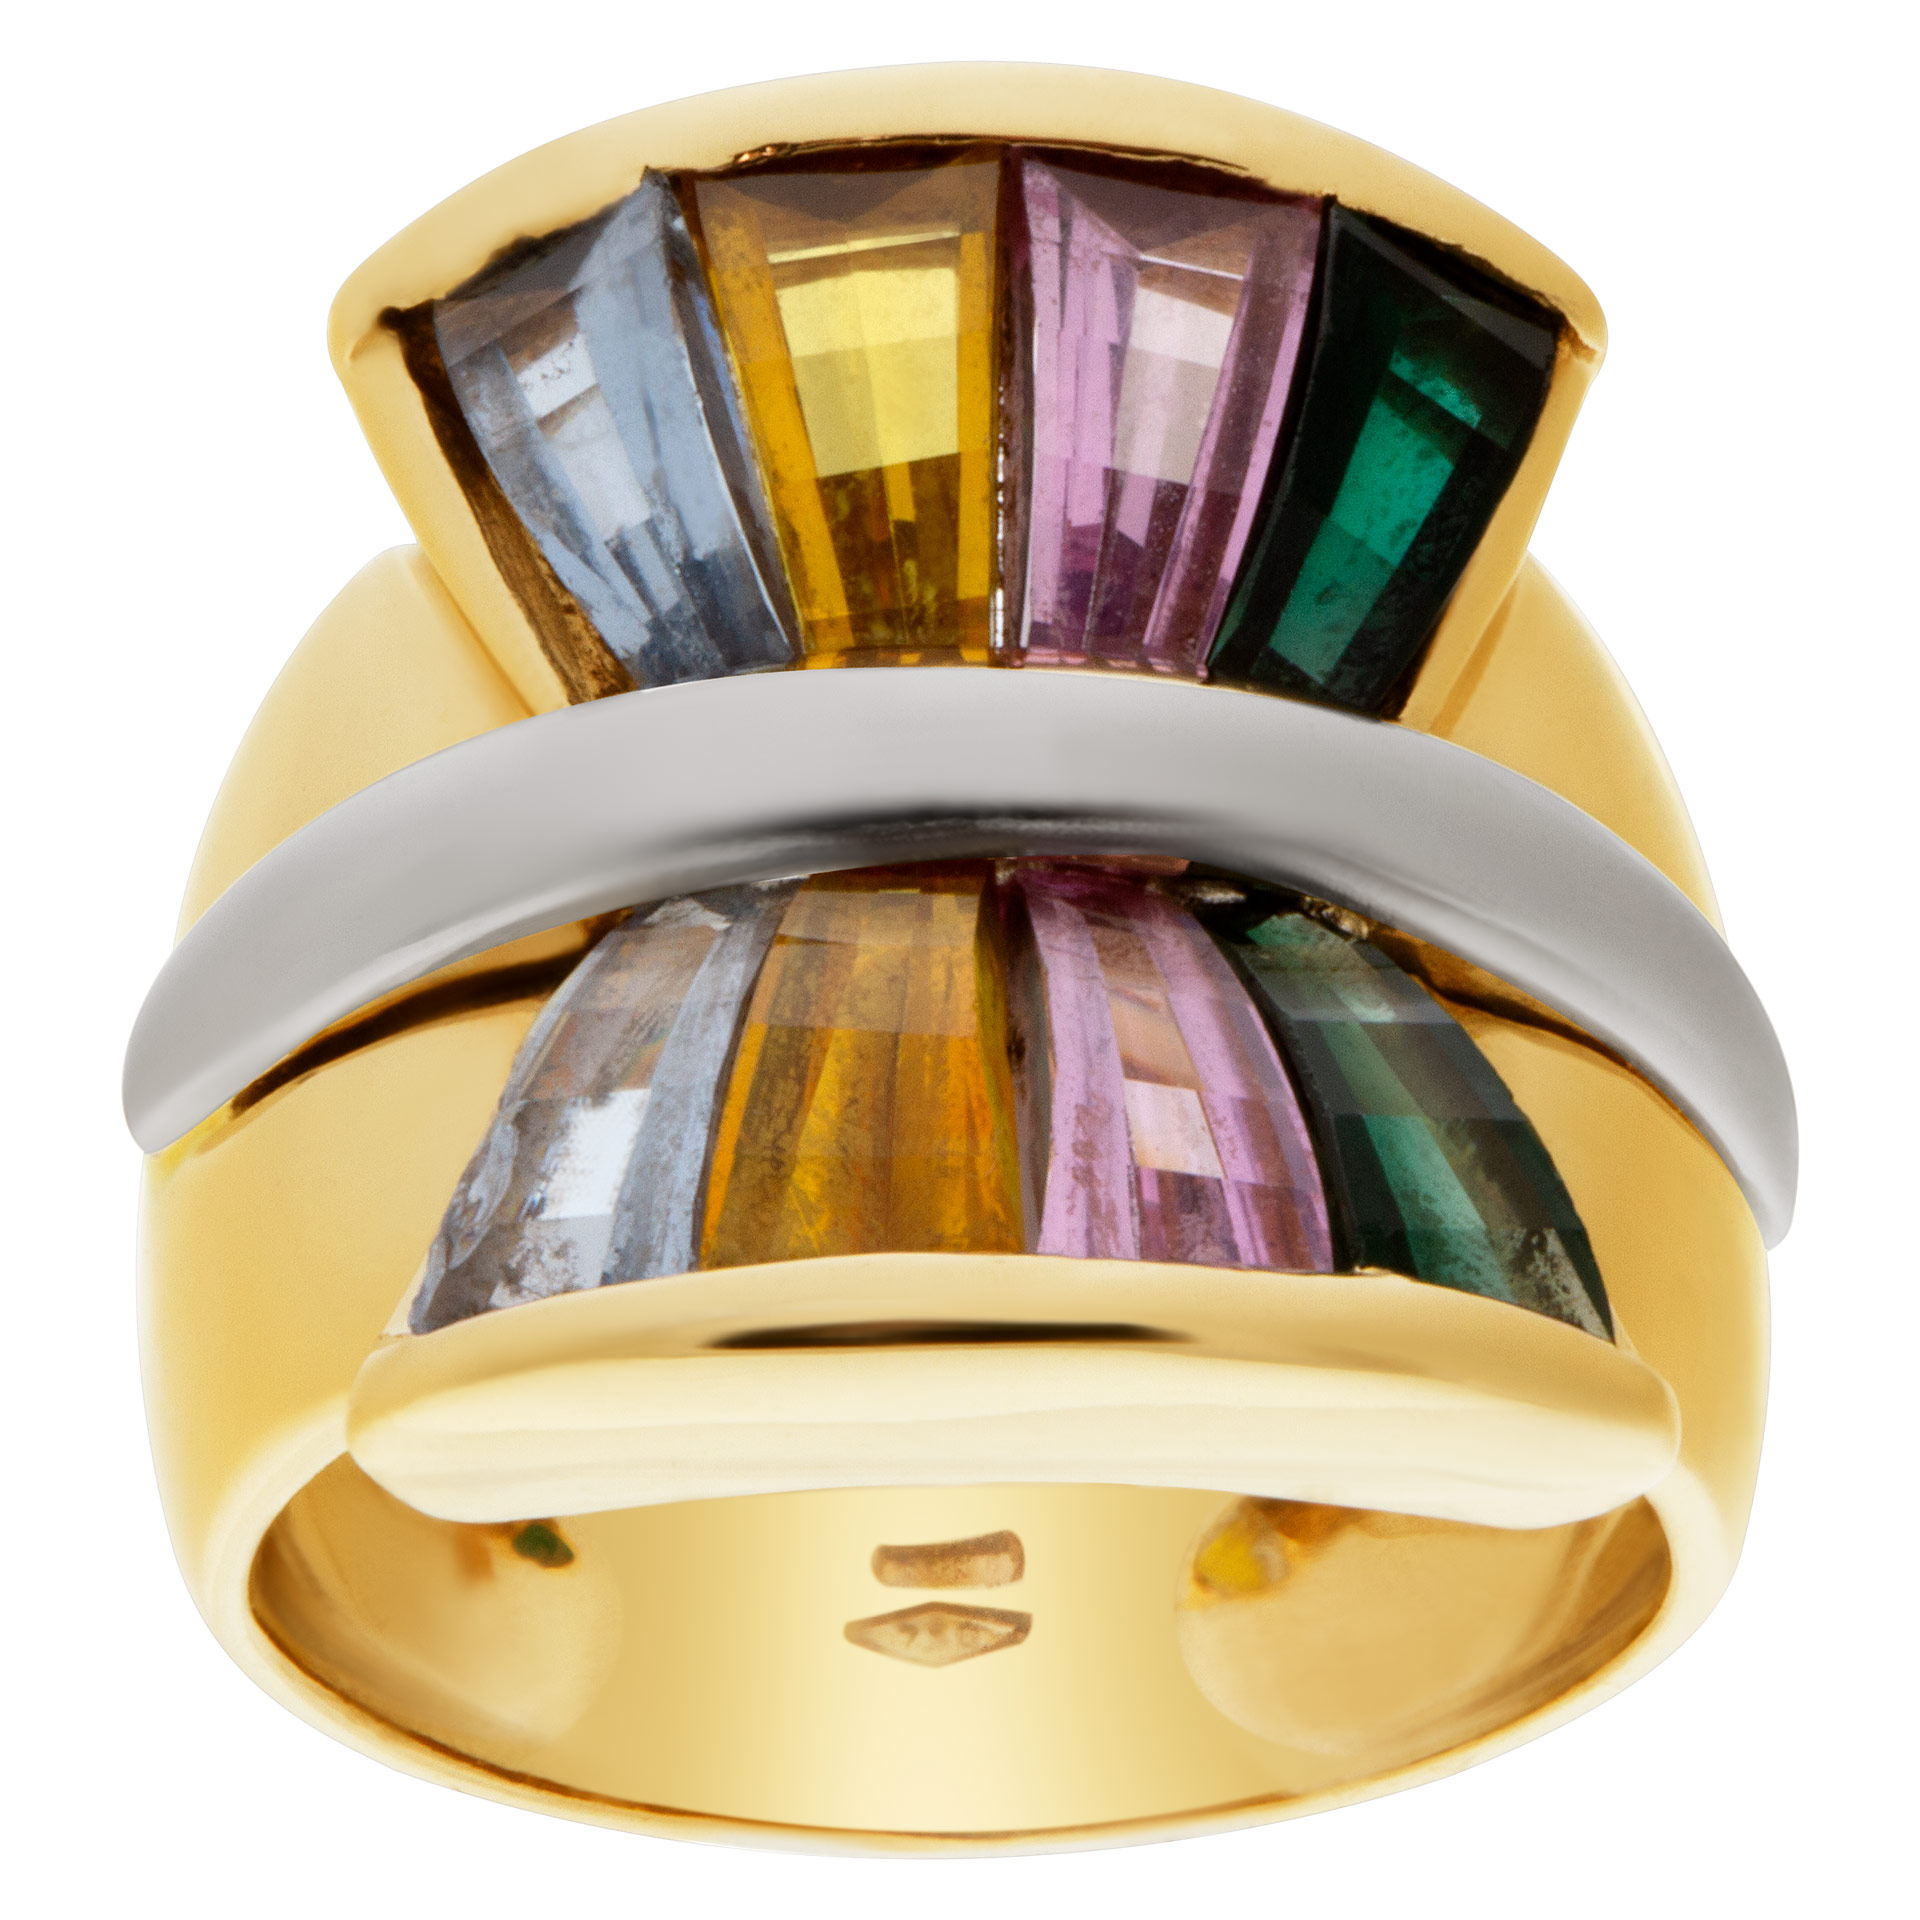 "Colorful Fan" tapered baguette cut colorful semi-precious stone ring in 14k